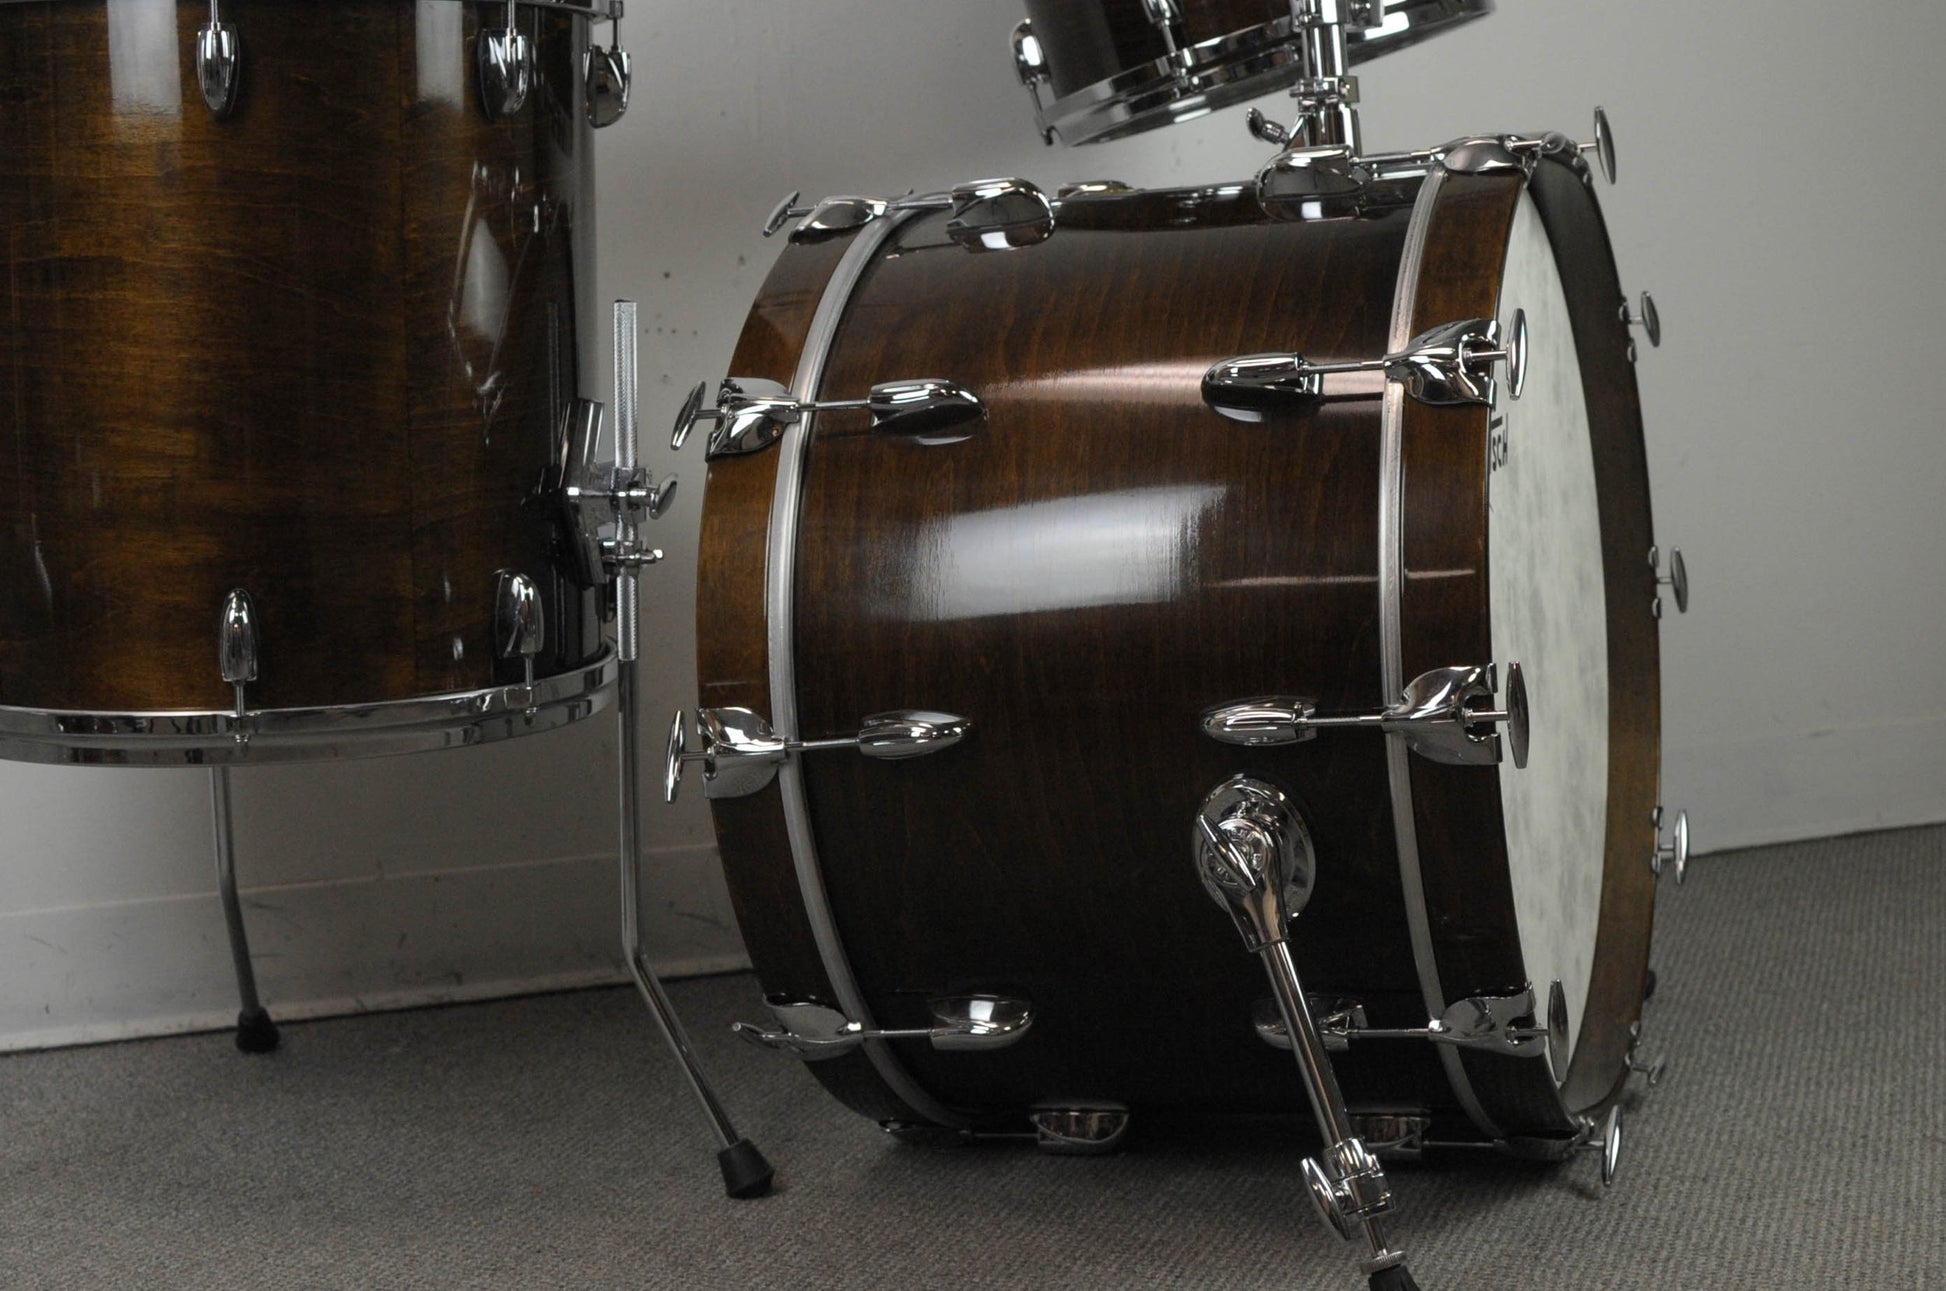 Gretsch USA Custom Antique Maple Gloss Drum Set